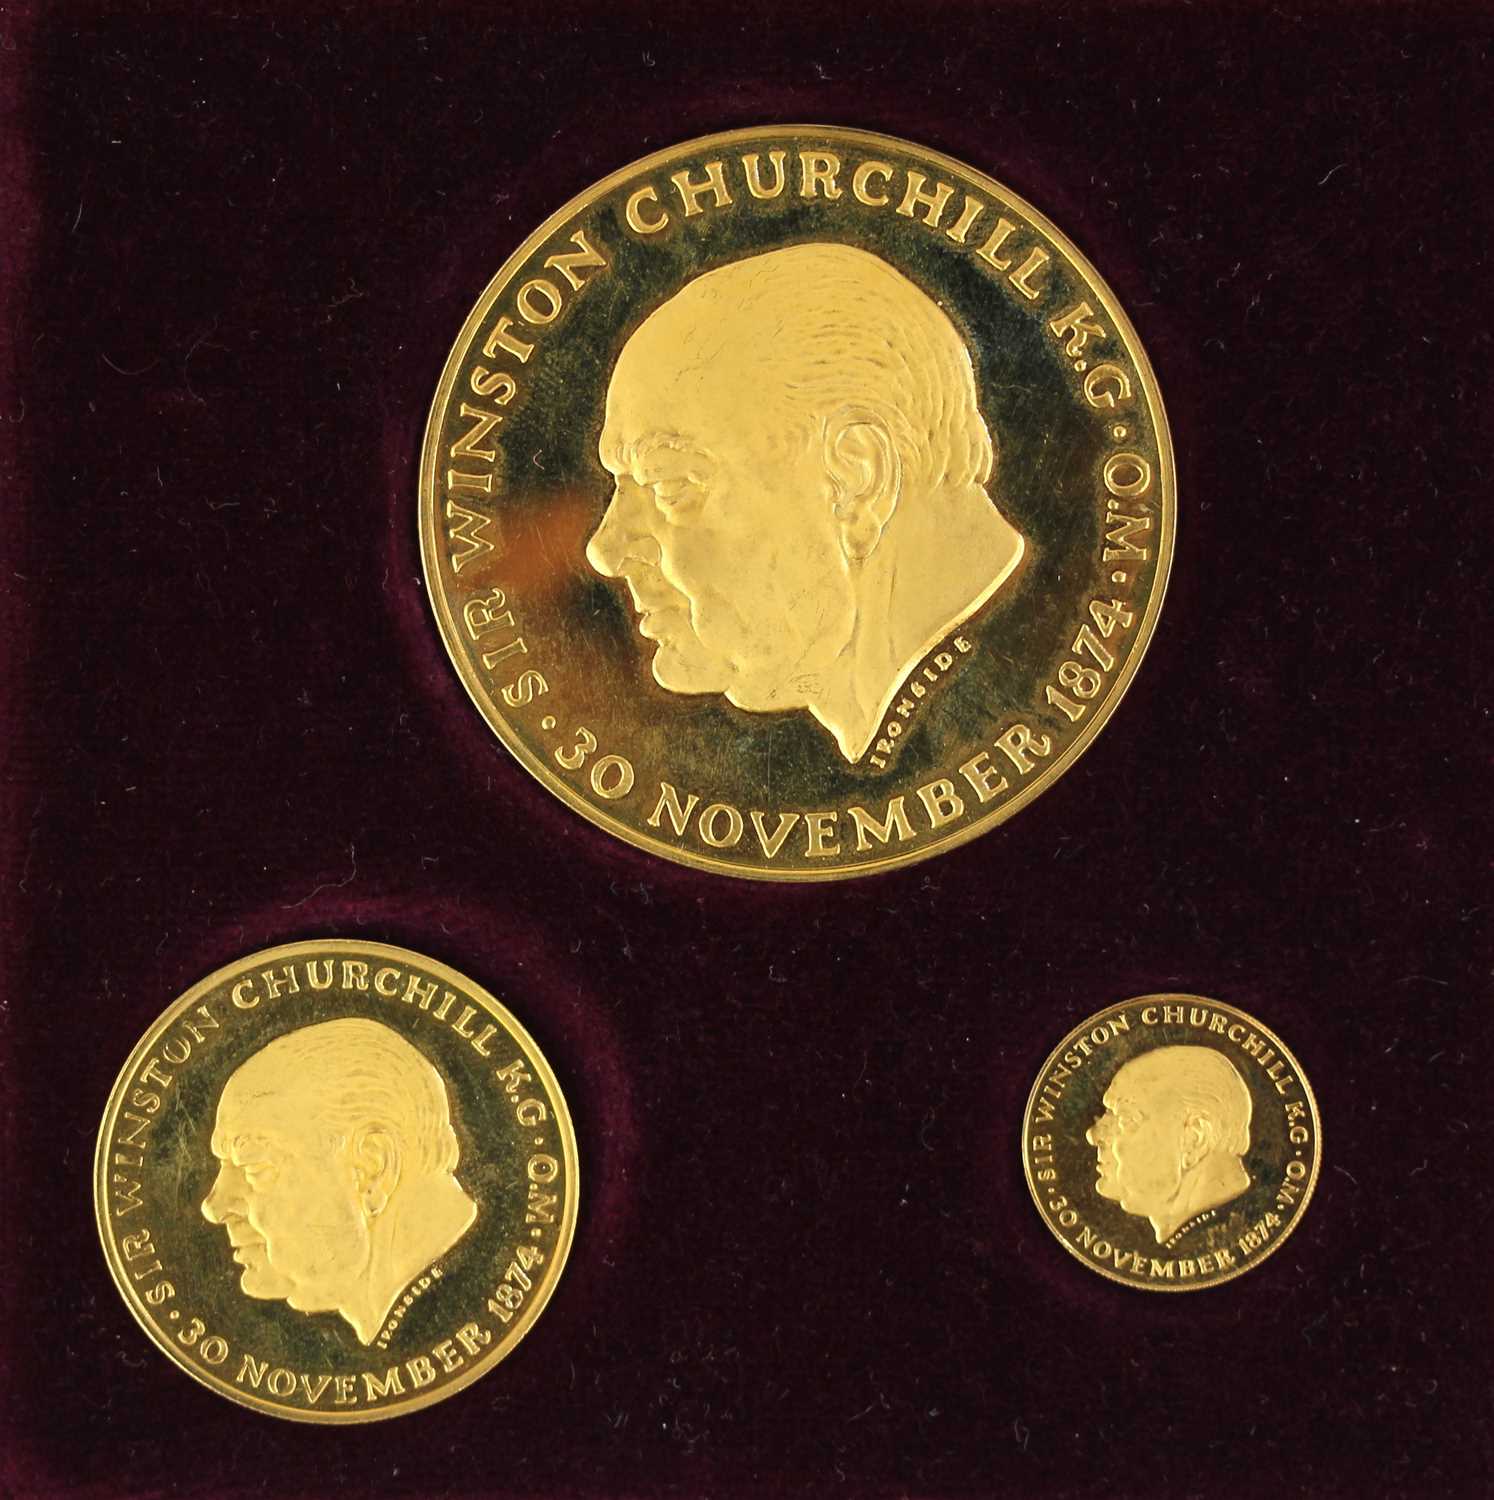 A Winston Churchill gold three medallion set 1964, each medallion .900 gold, depicting a portrait